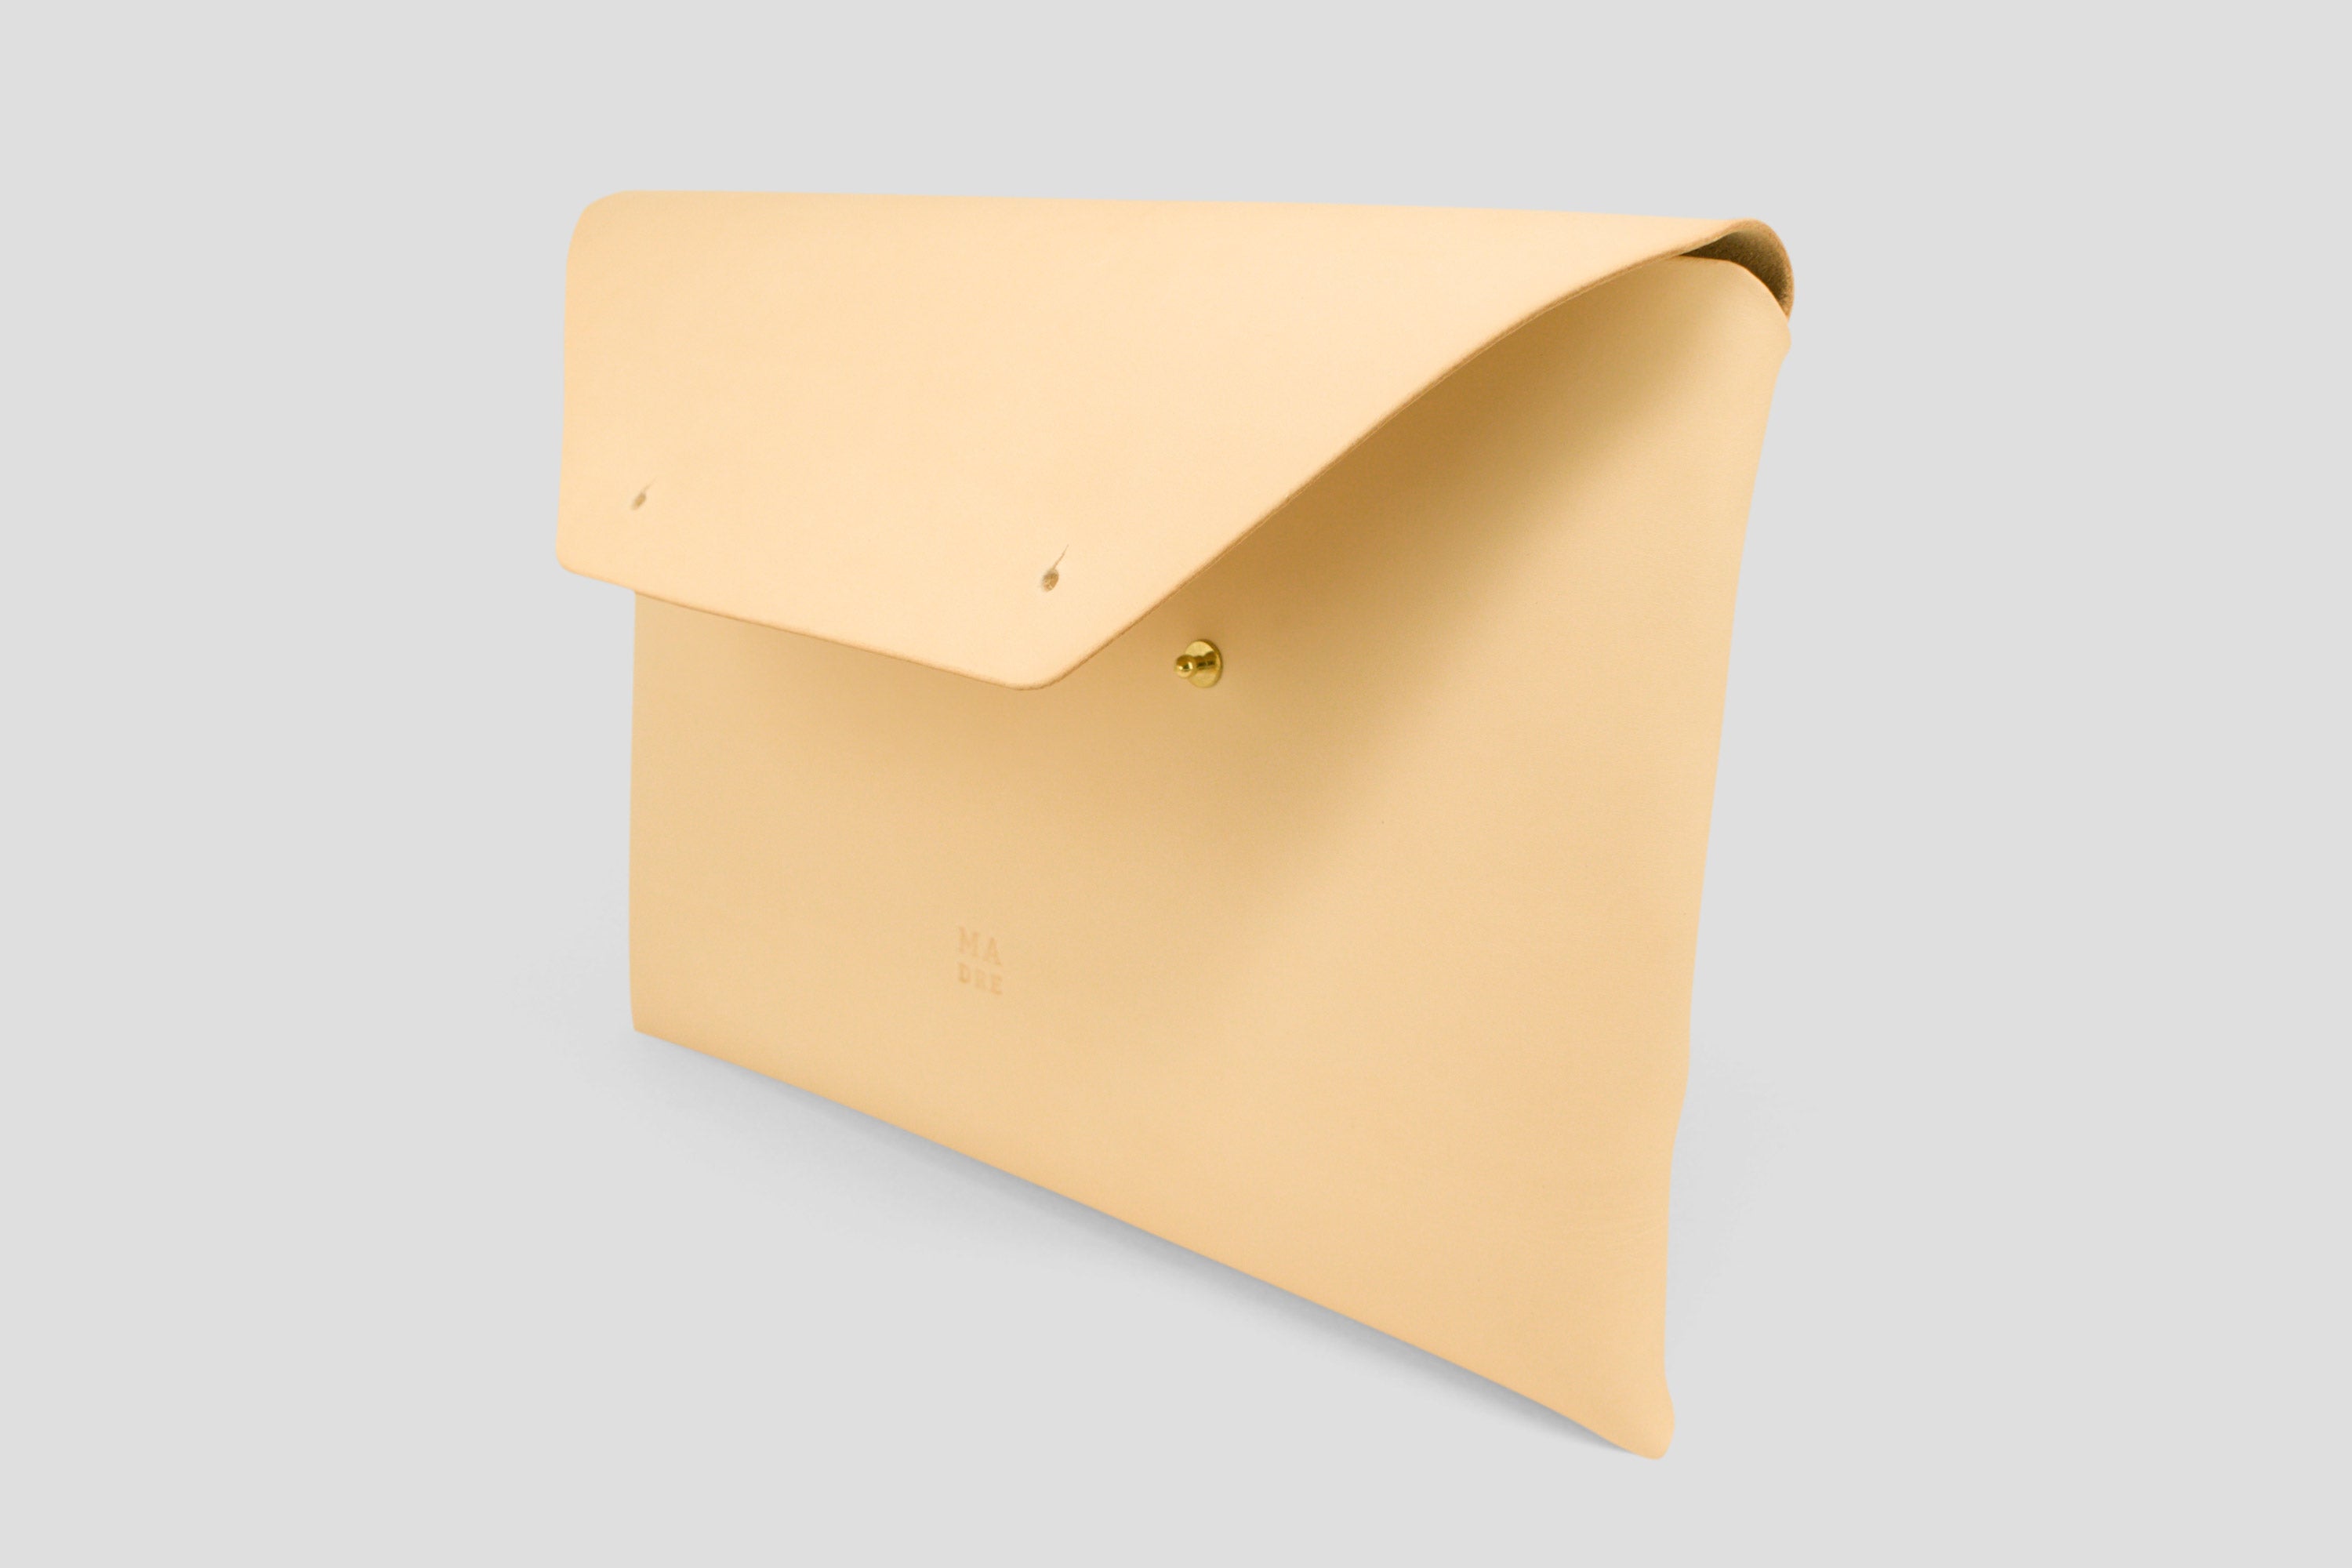 Leather envelop clutch